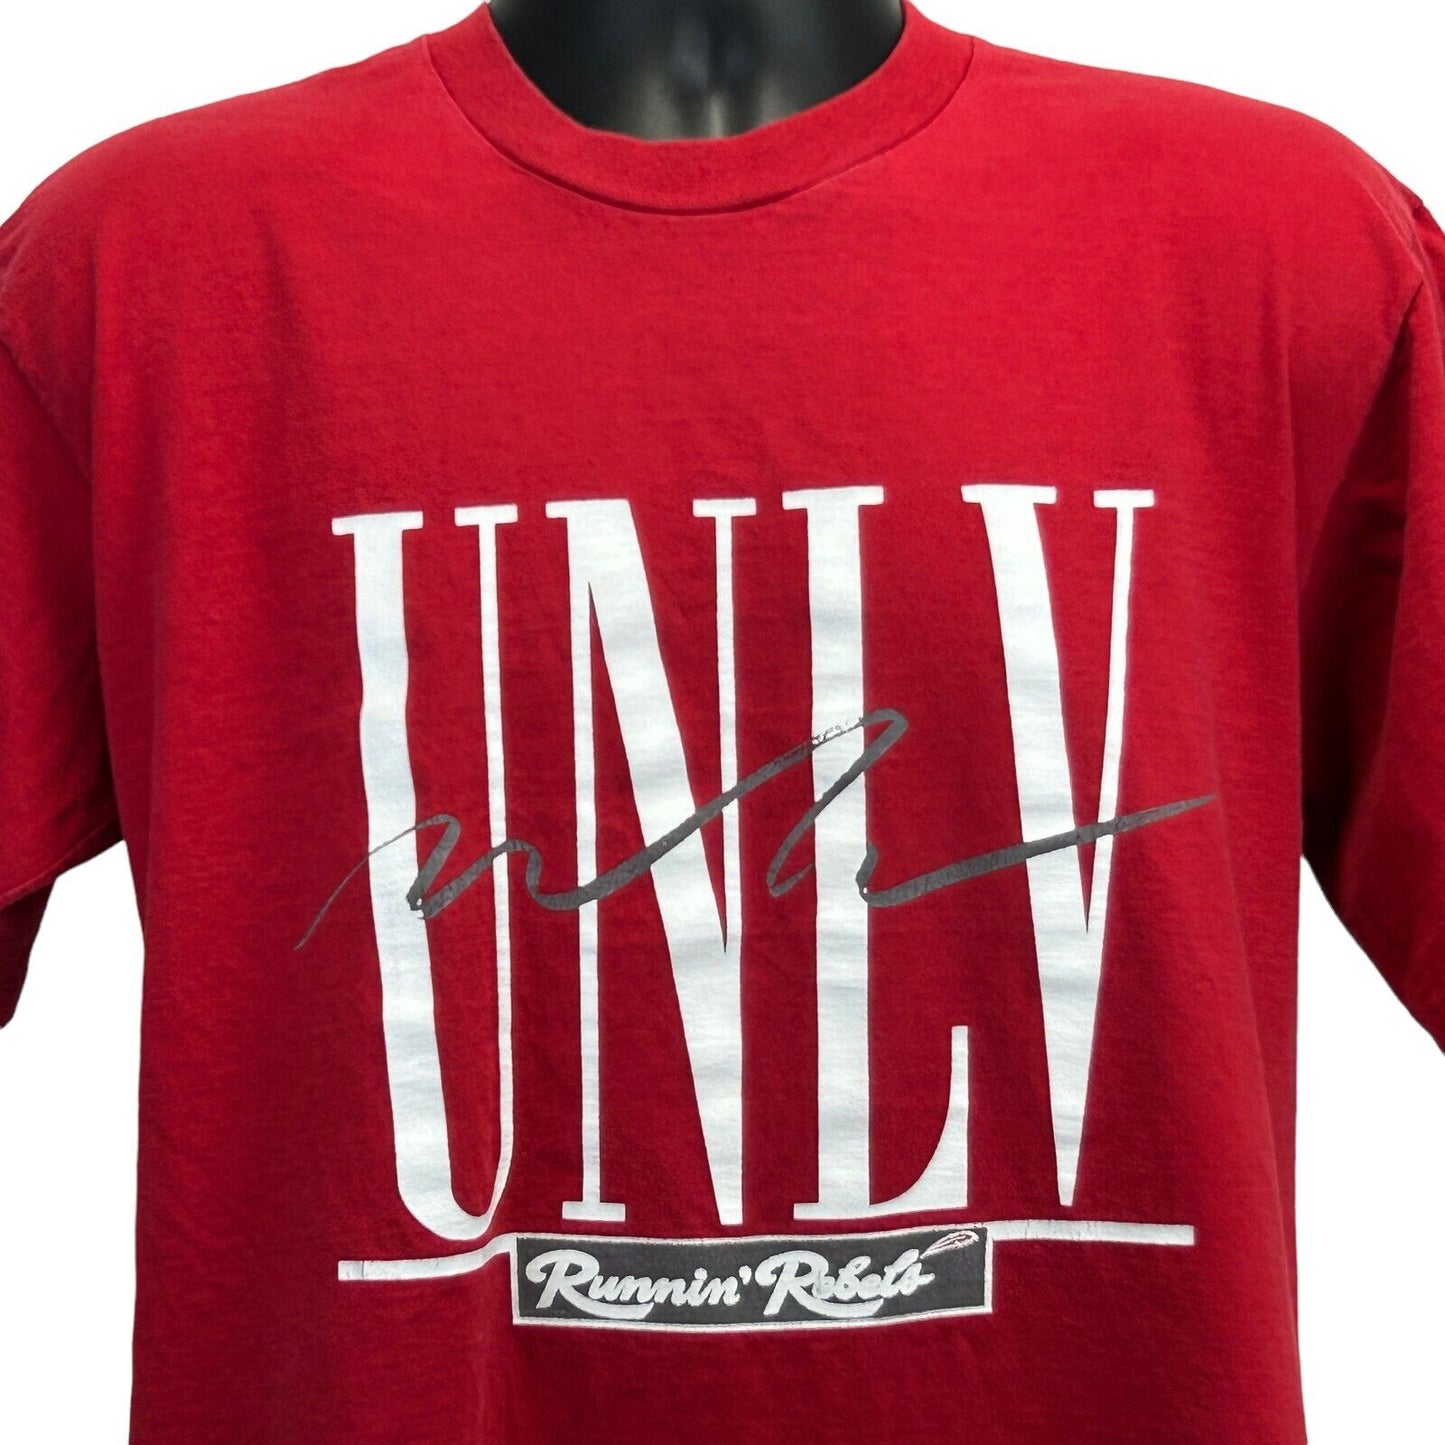 UNLV University Nevada Las Vegas Vintage 90s T Shirt NCAA Basketball USA Large